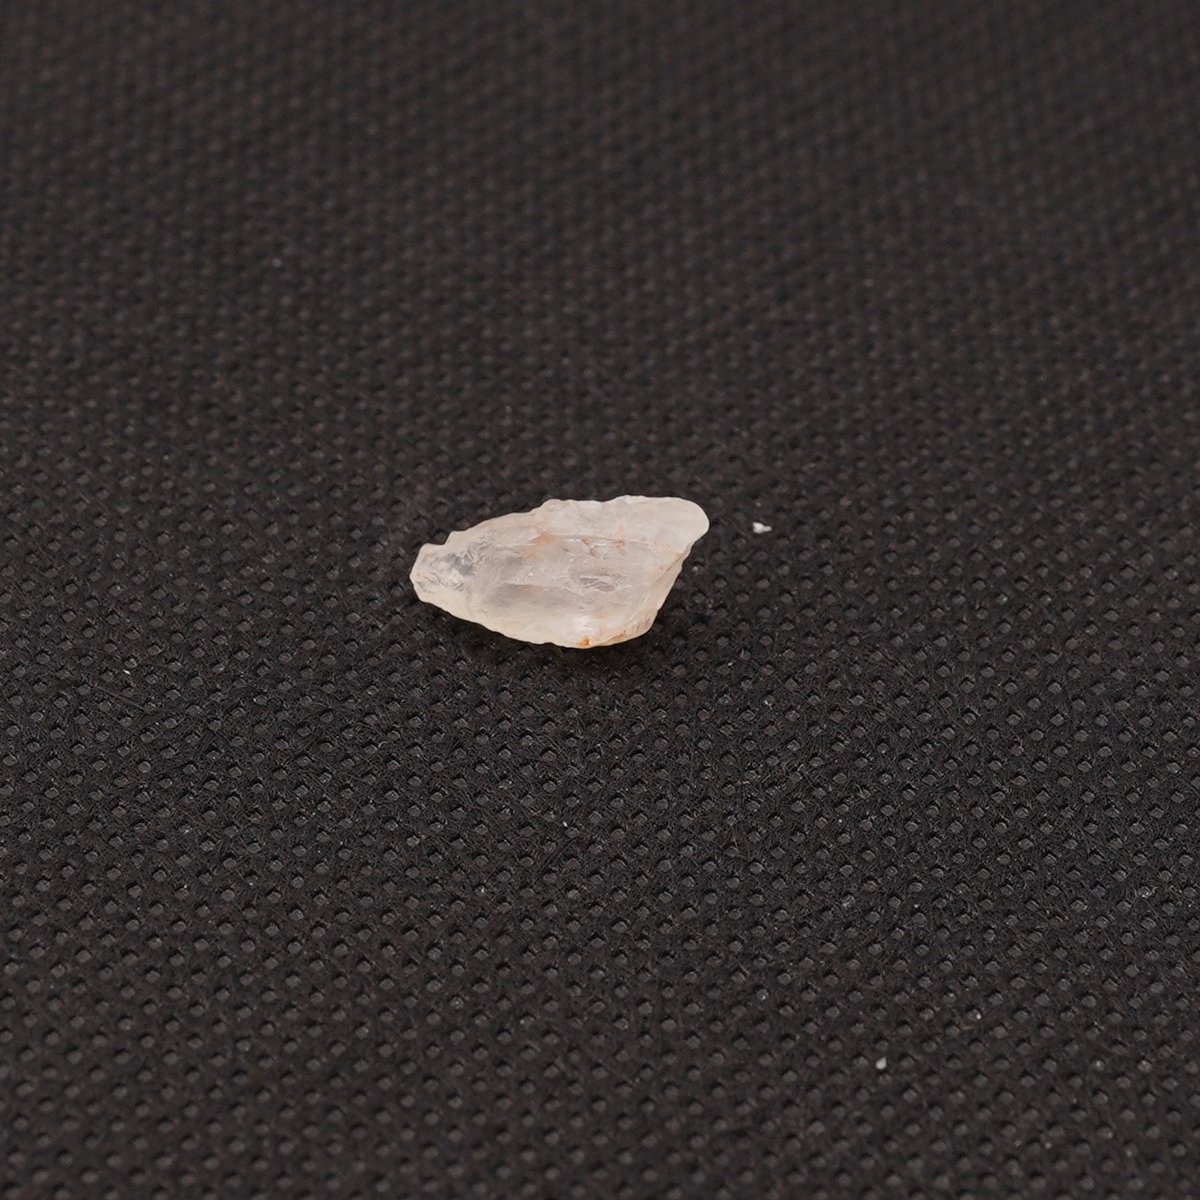 Fenacit nigerian cristal natural unicat f157